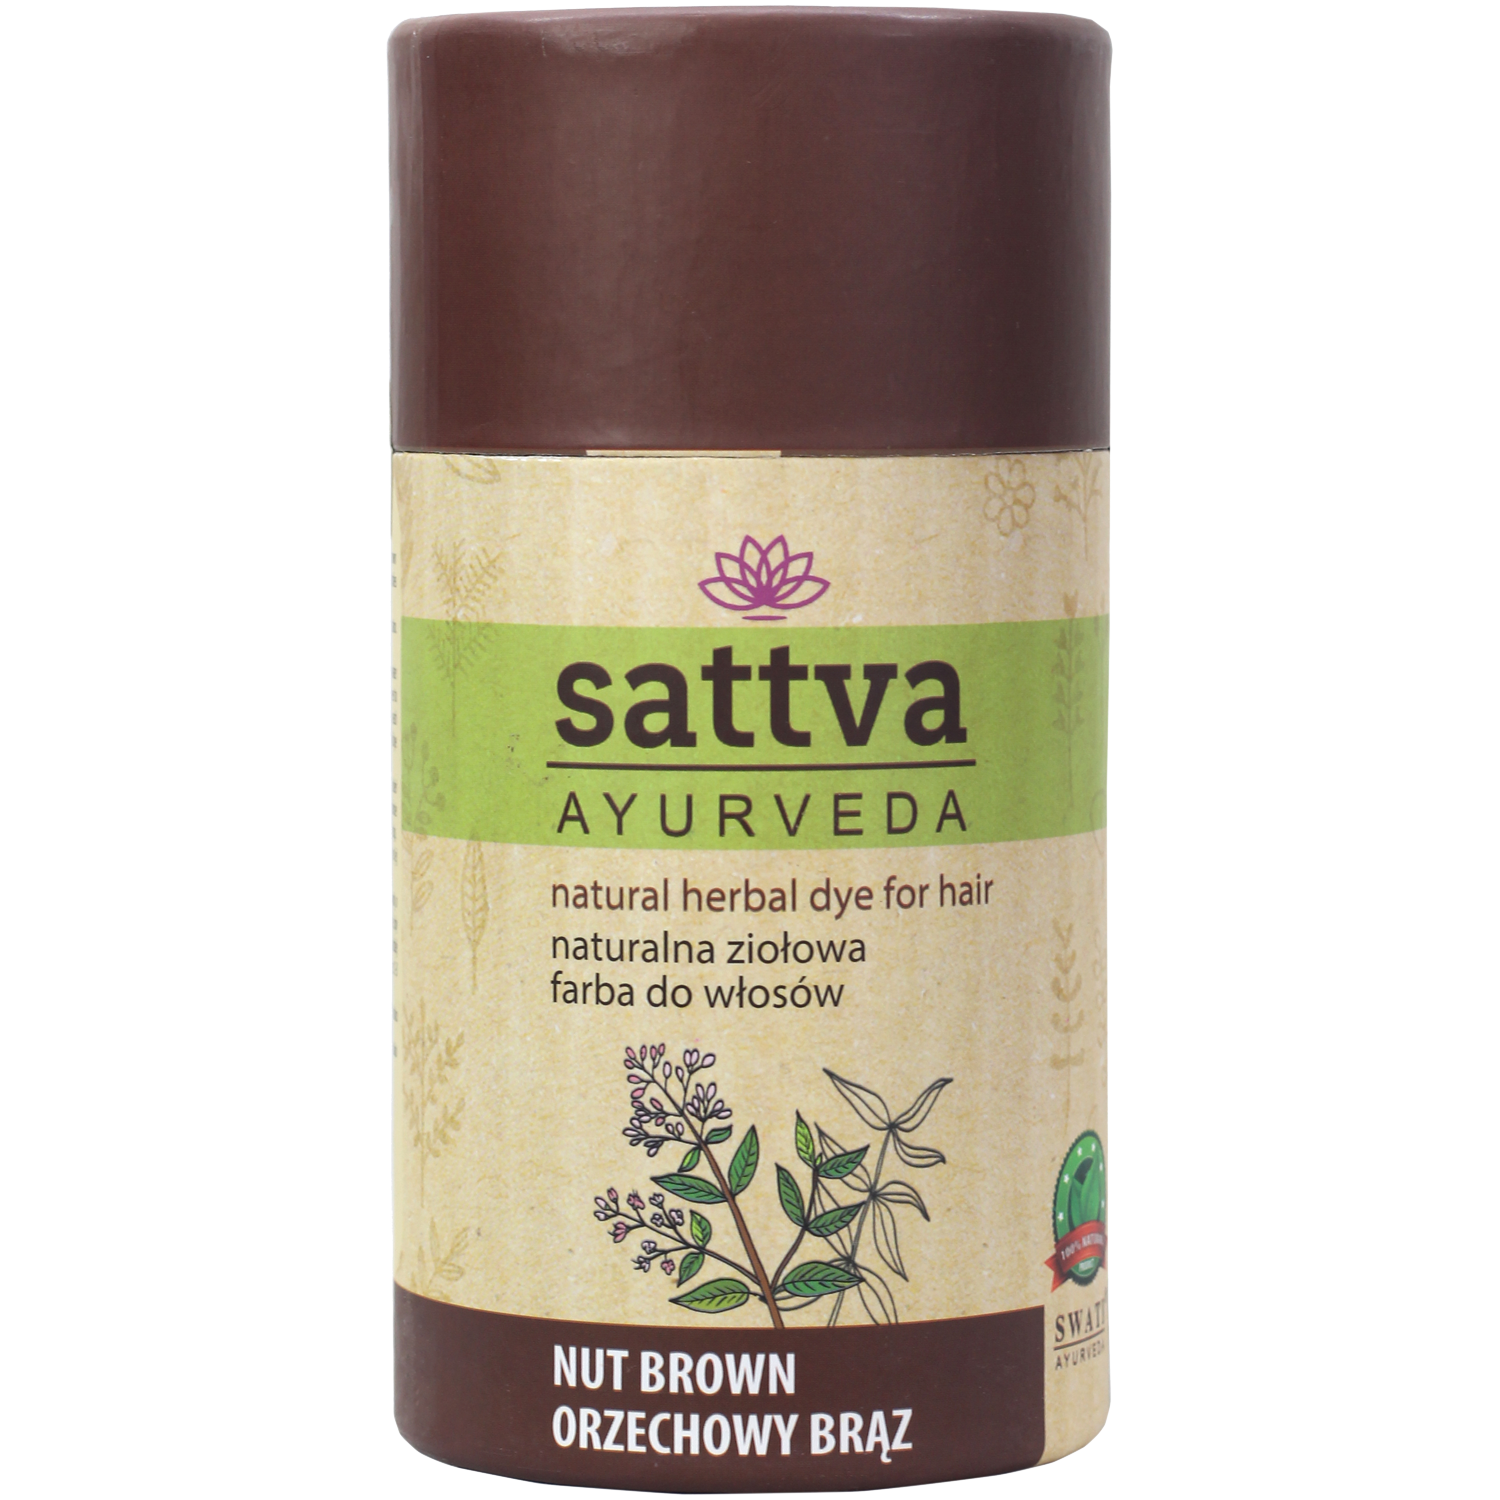 Sattva Ayurveda натуральная травяная краска для волос орех коричневый, 150 г краска для волос sattva ayurveda 150 гр